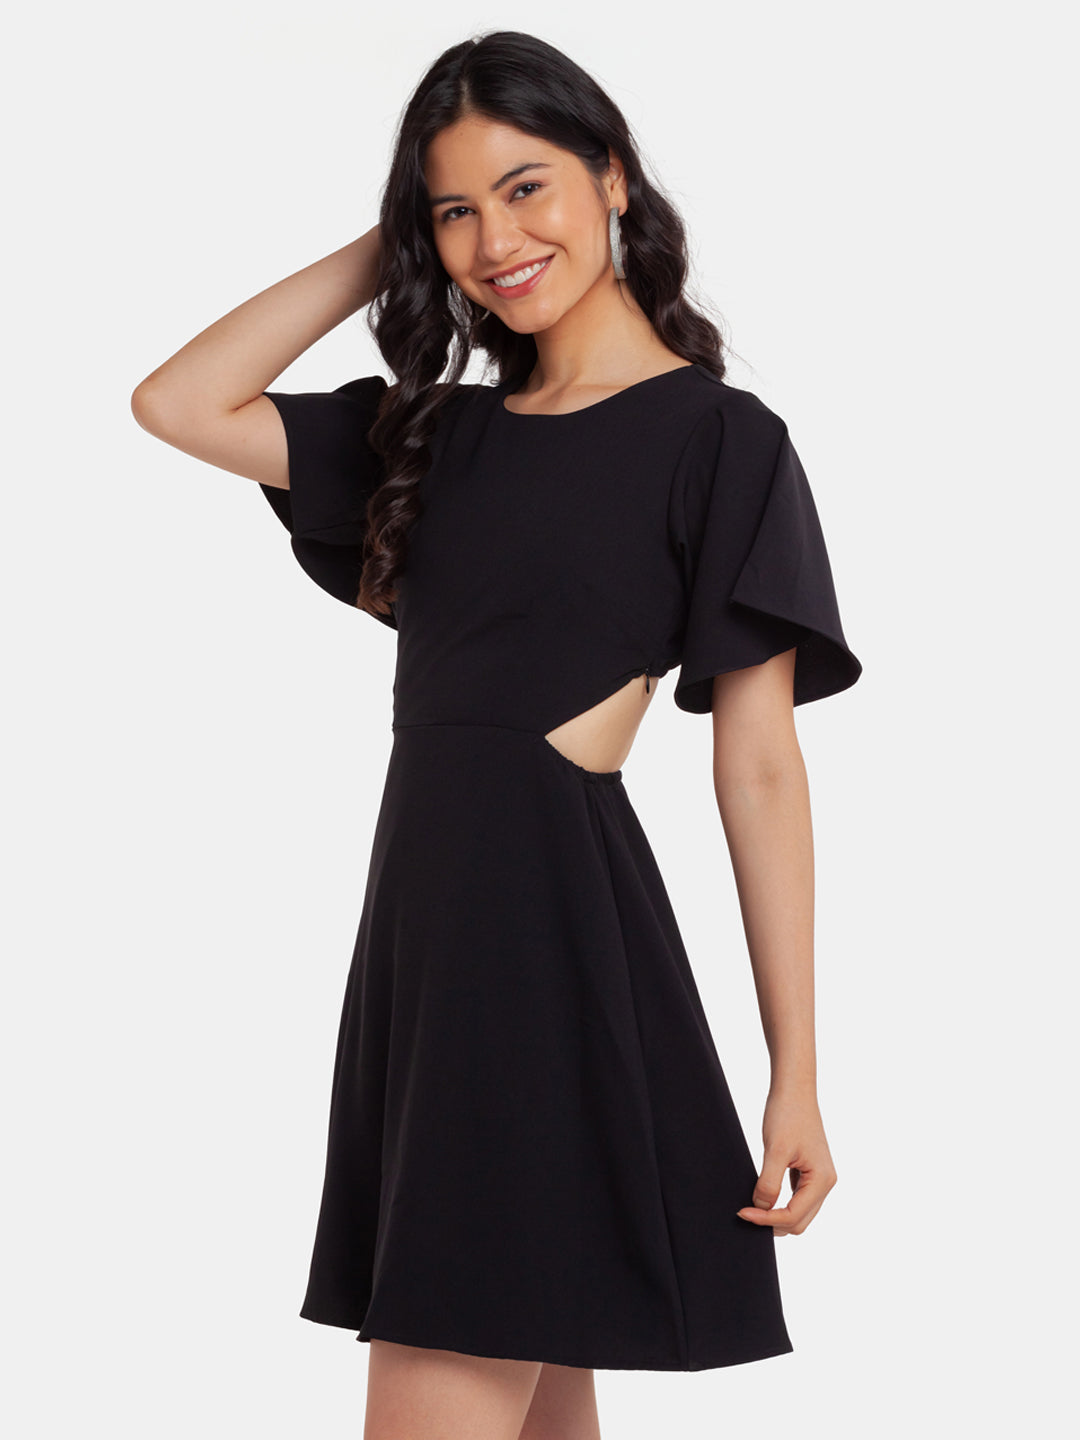 Black Solid Cutout Short Dress For Women